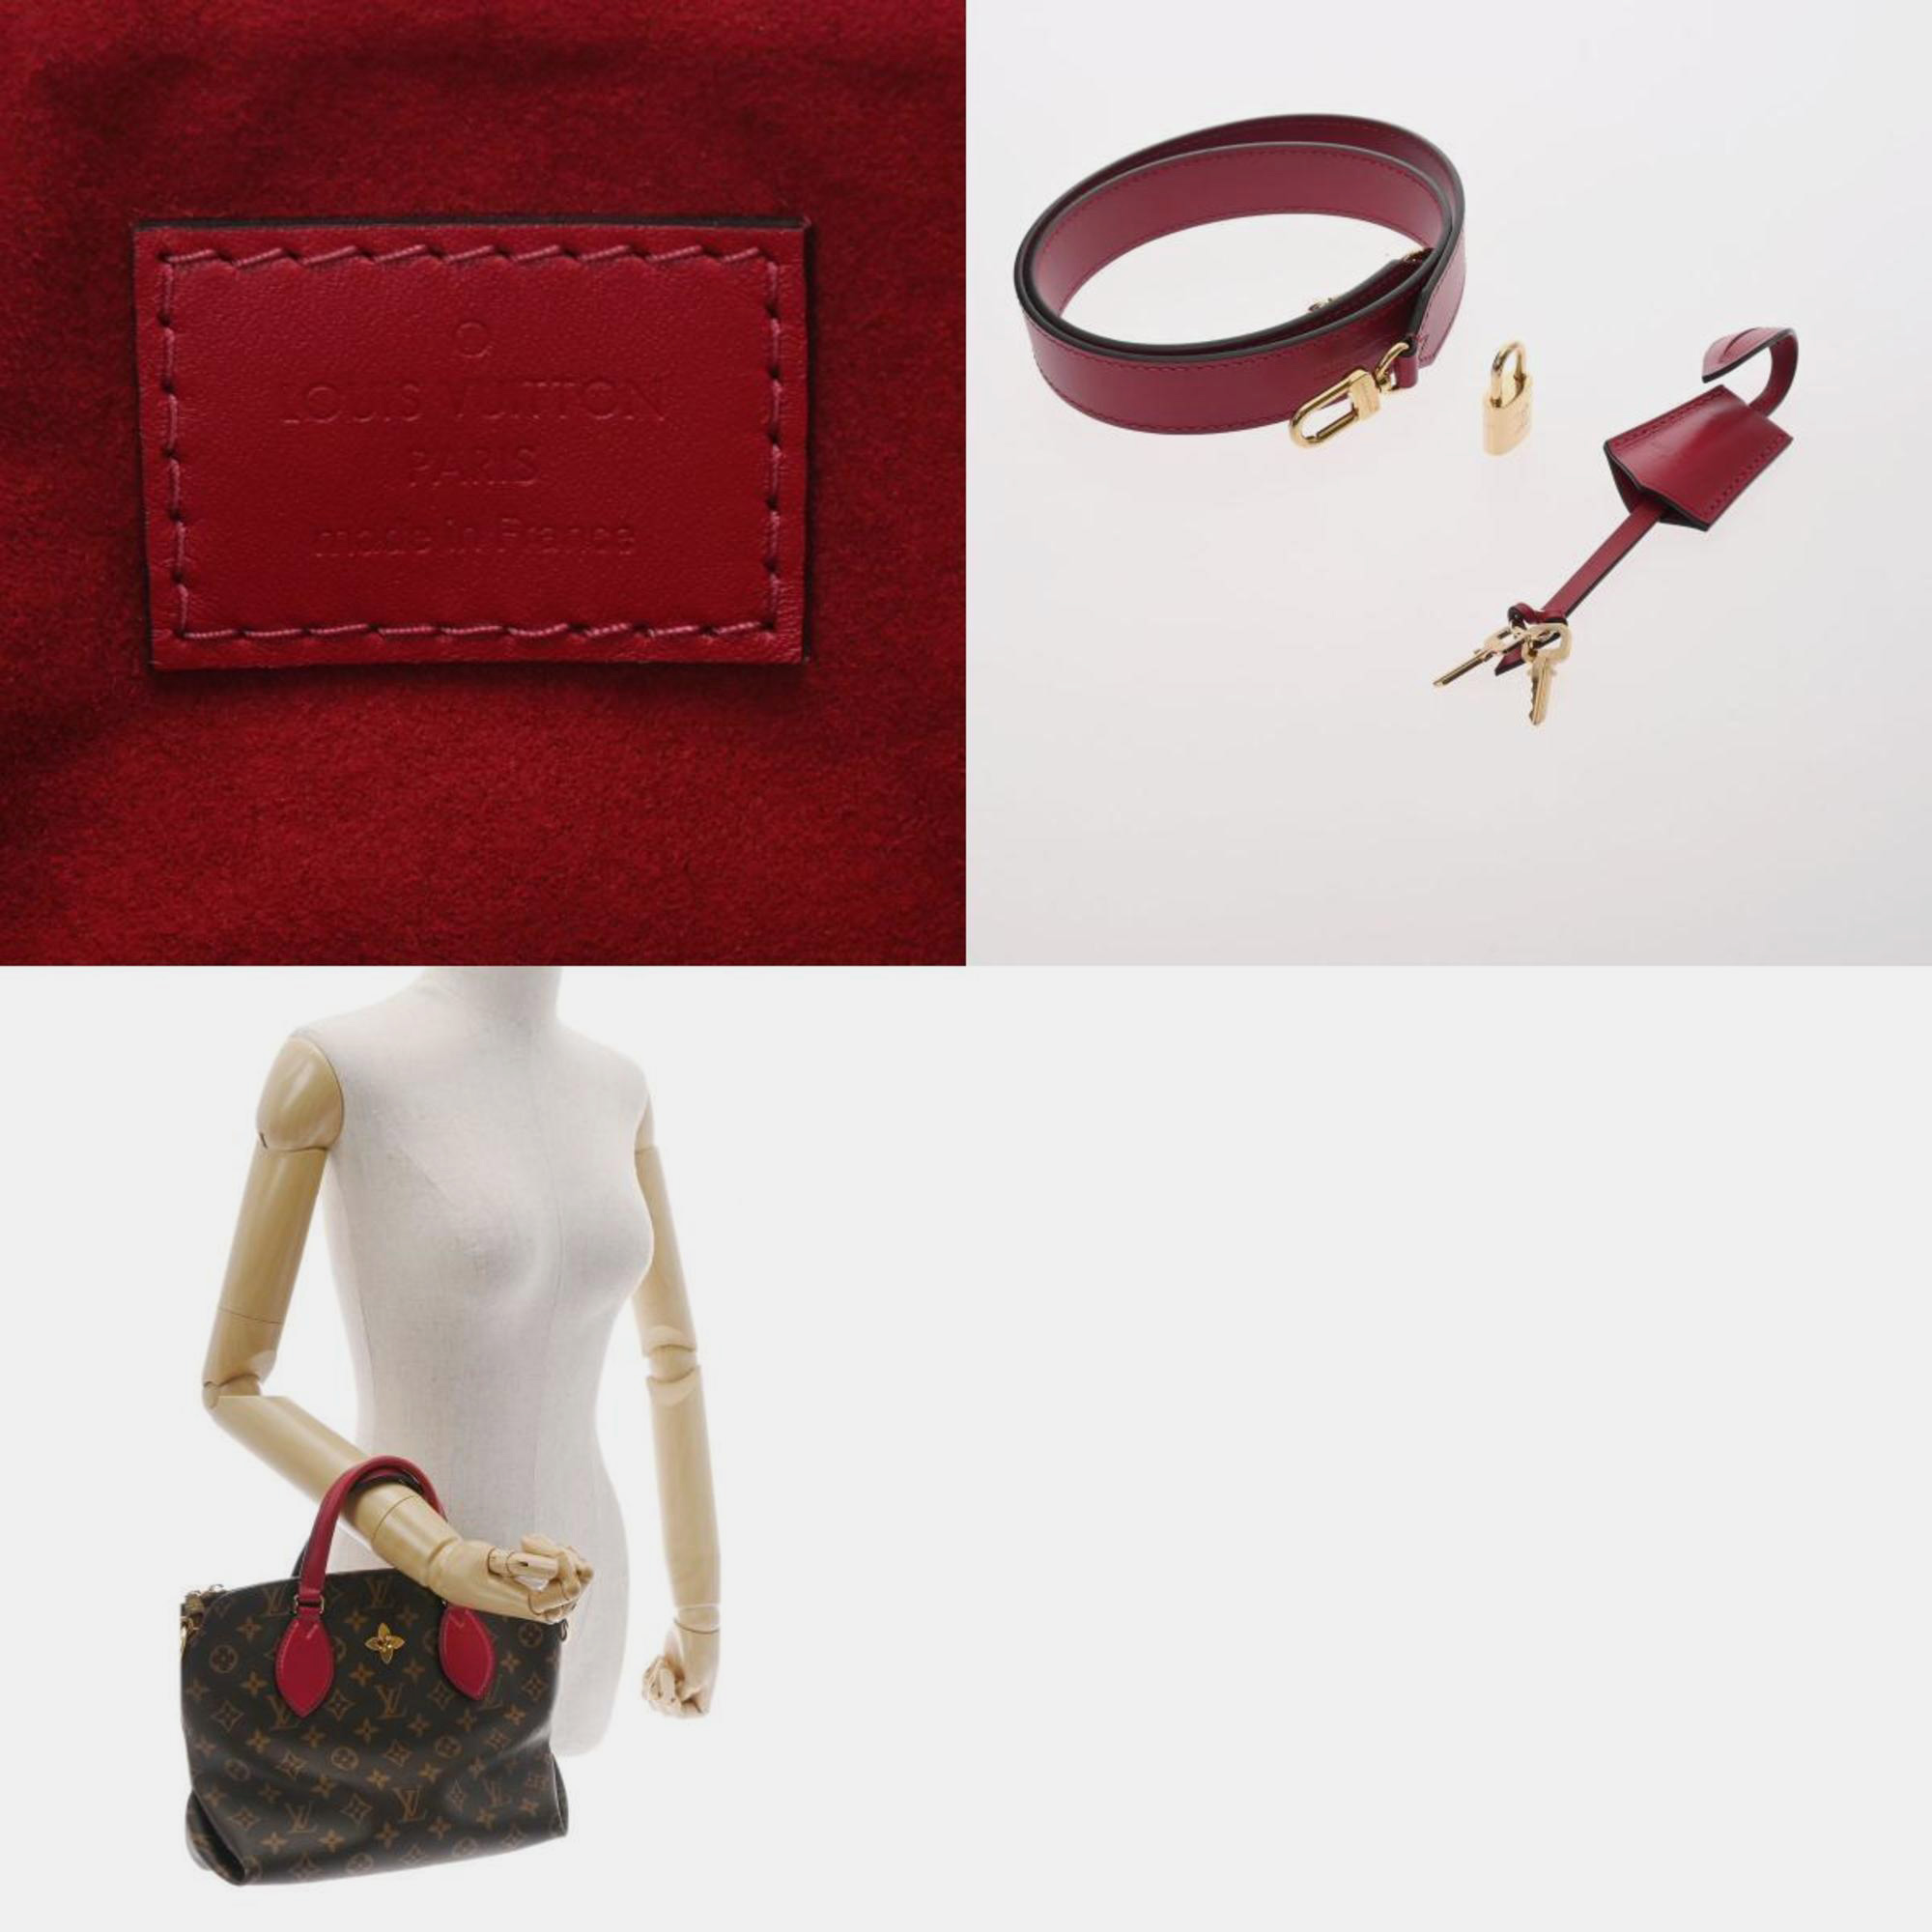 Louis Vuitton Brown/Red Monogram Flower Zipped MM Tote Bag